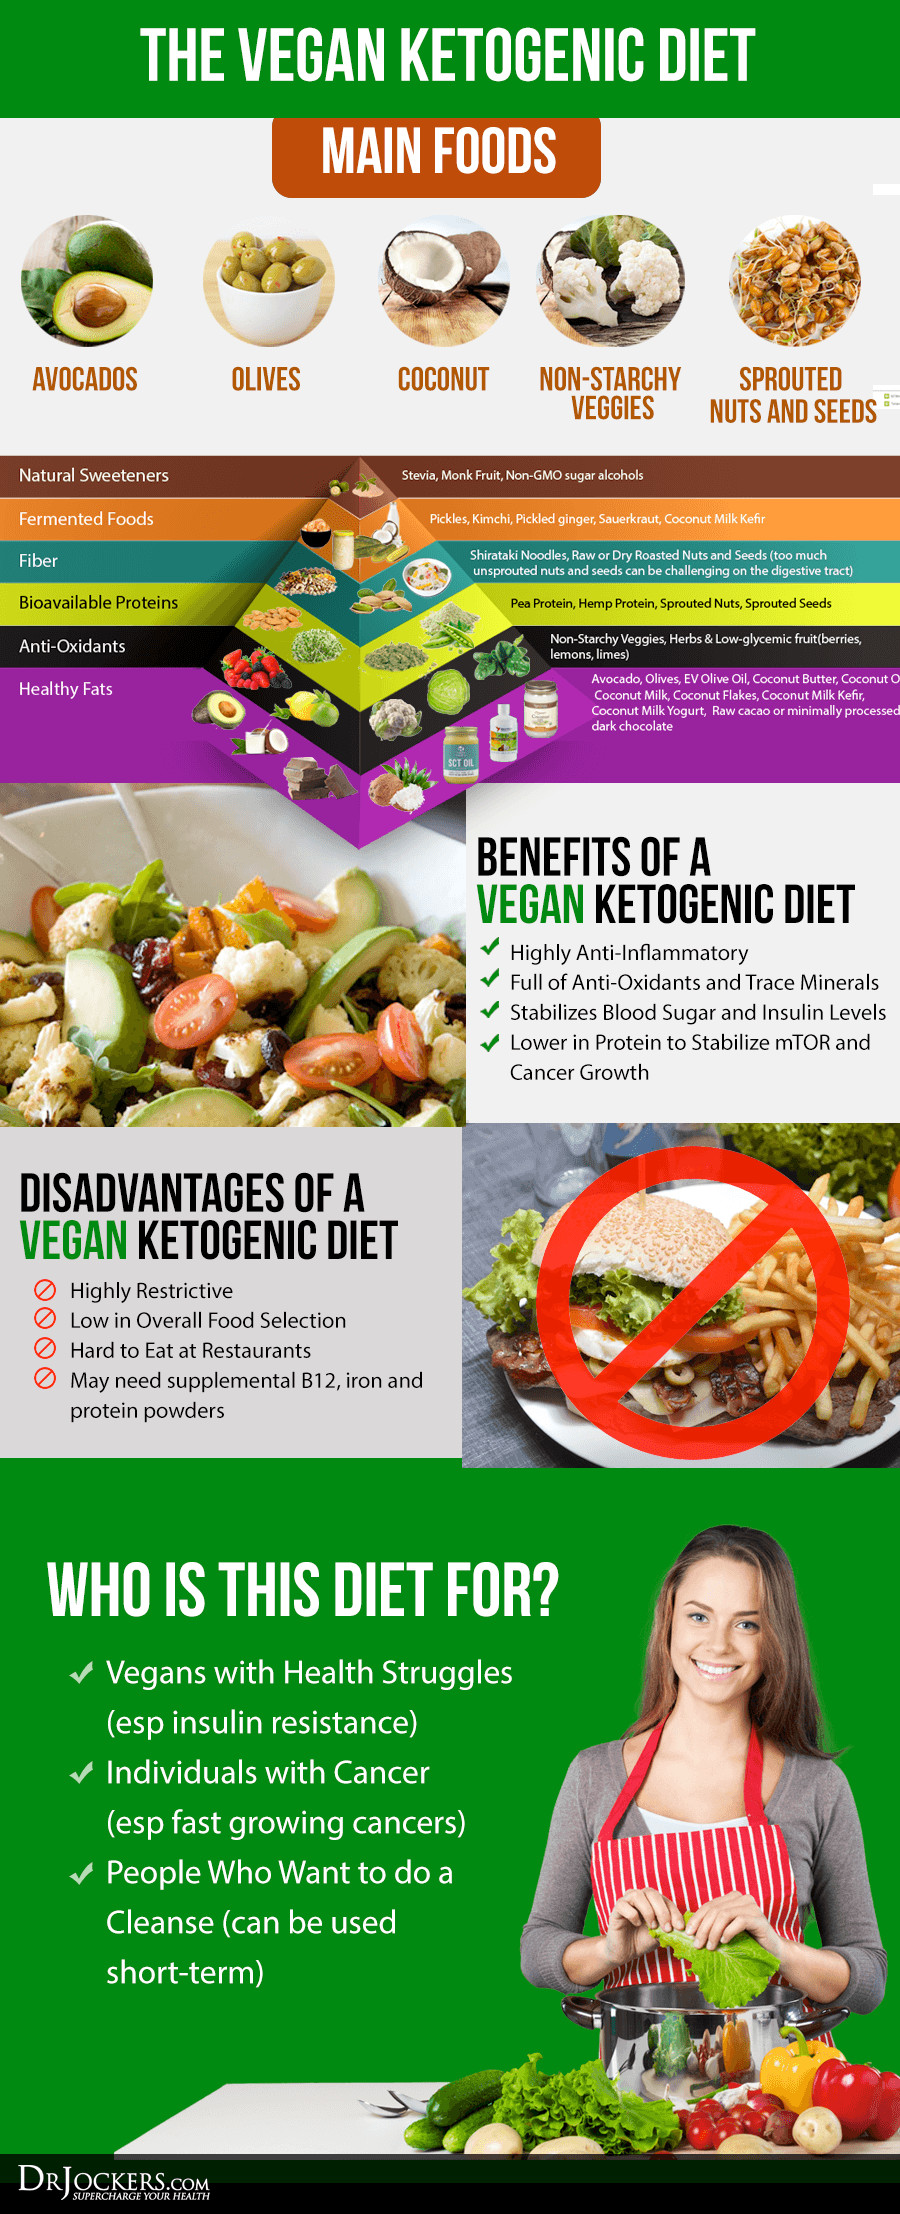 Vegan Keto Grocery List
 How To Follow A Vegan Ketogenic Diet DrJockers